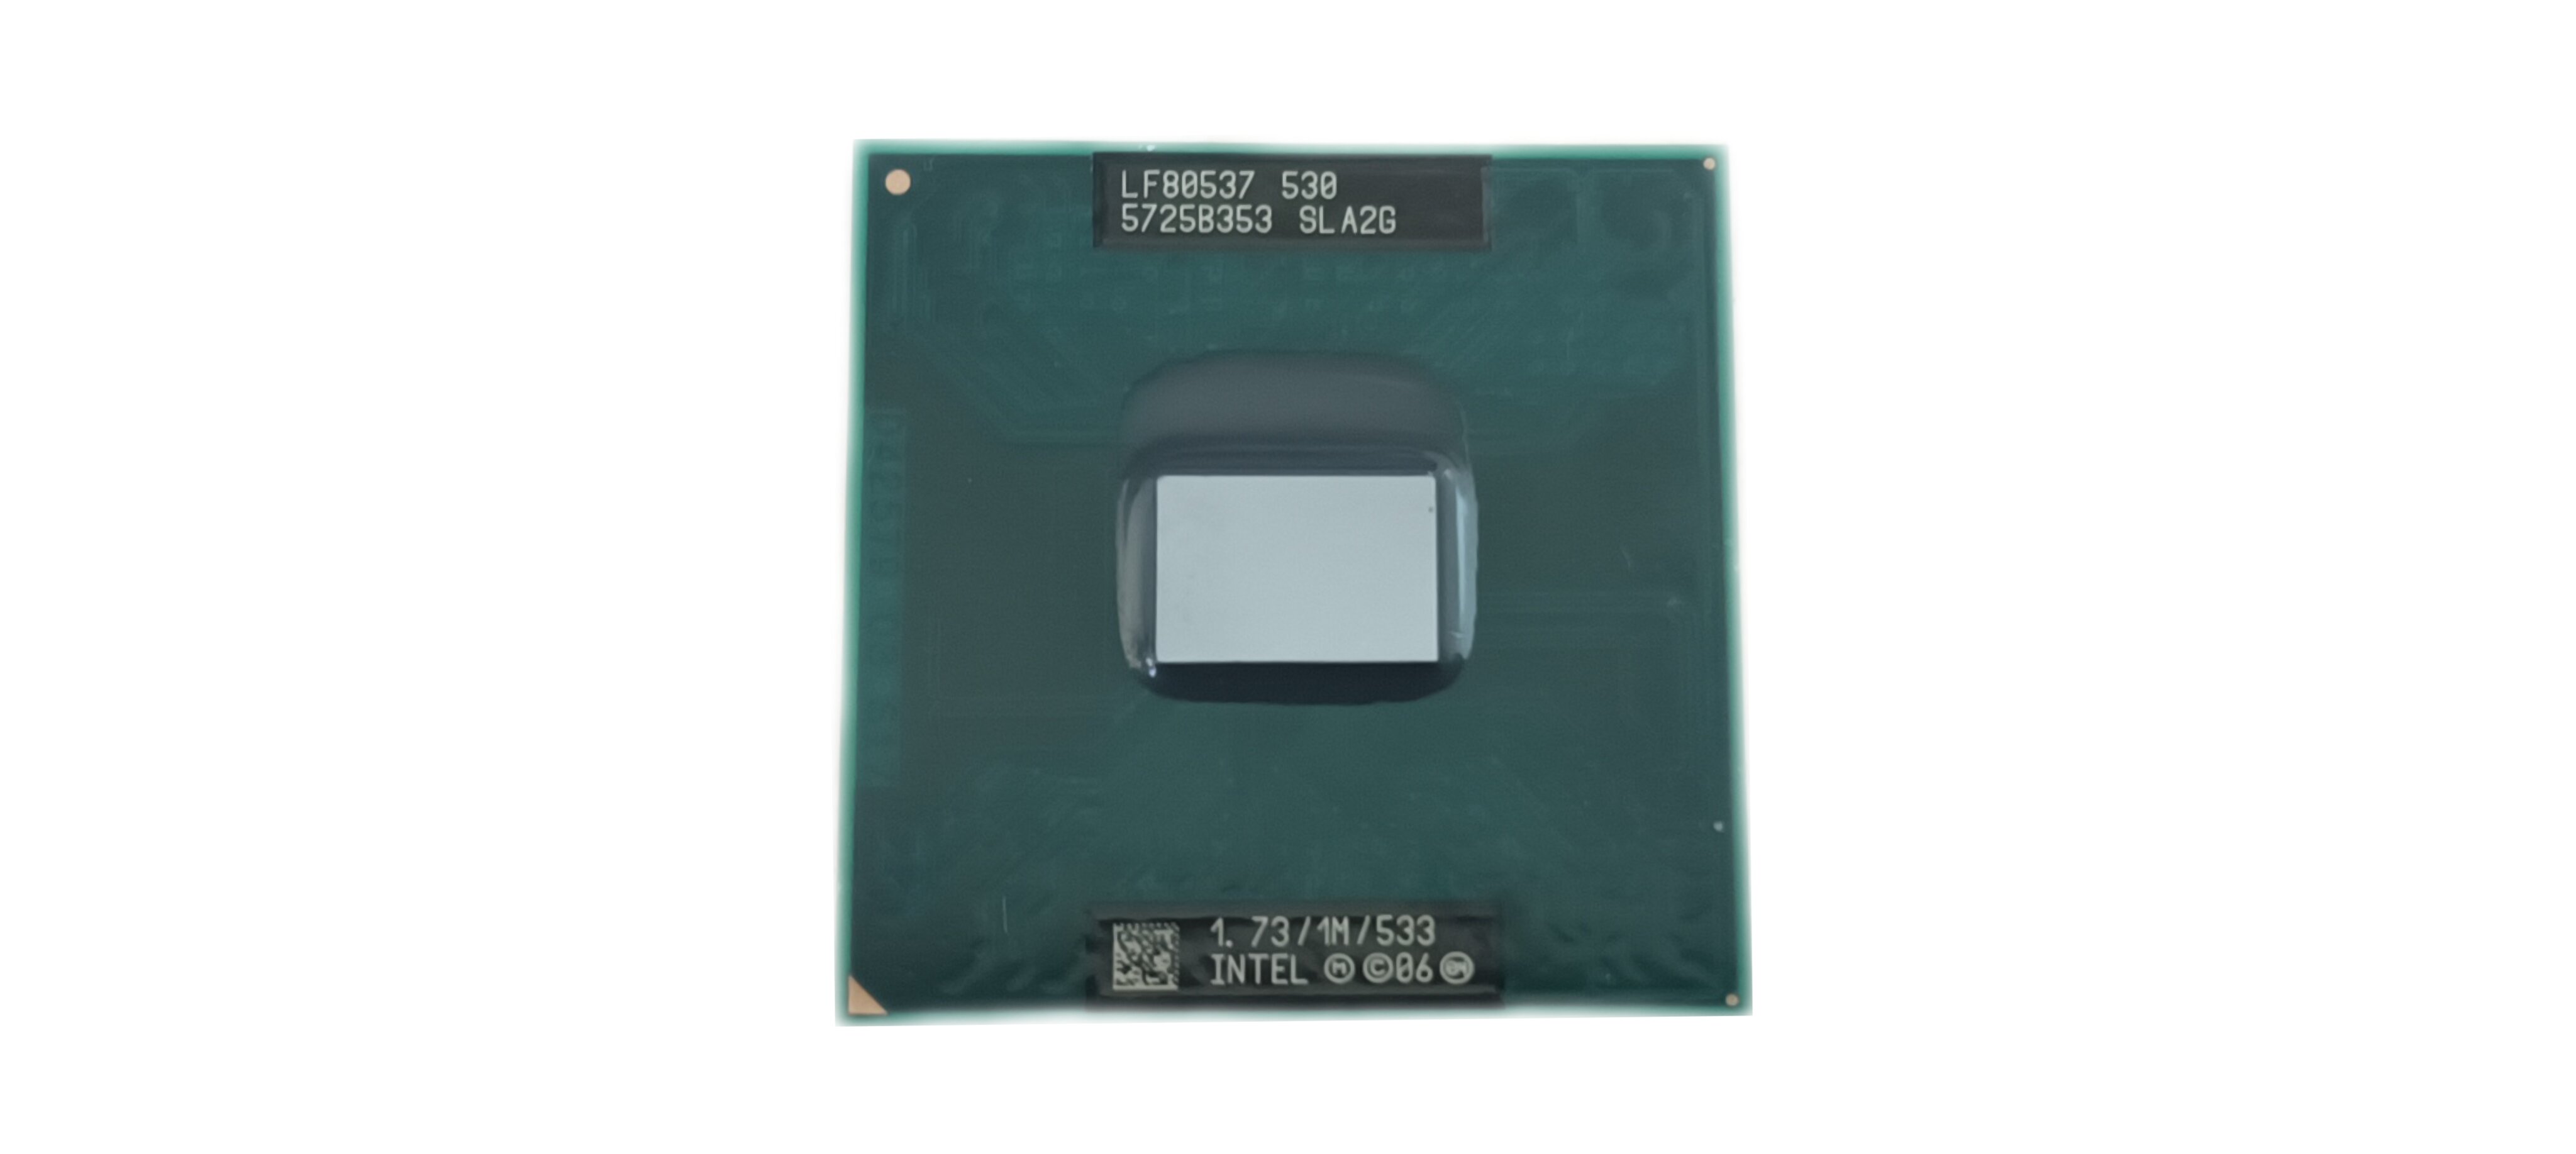 Процессор для ноутбука Intel Celeron M530 [1M Cache 1.73 GHz 533 MHz]